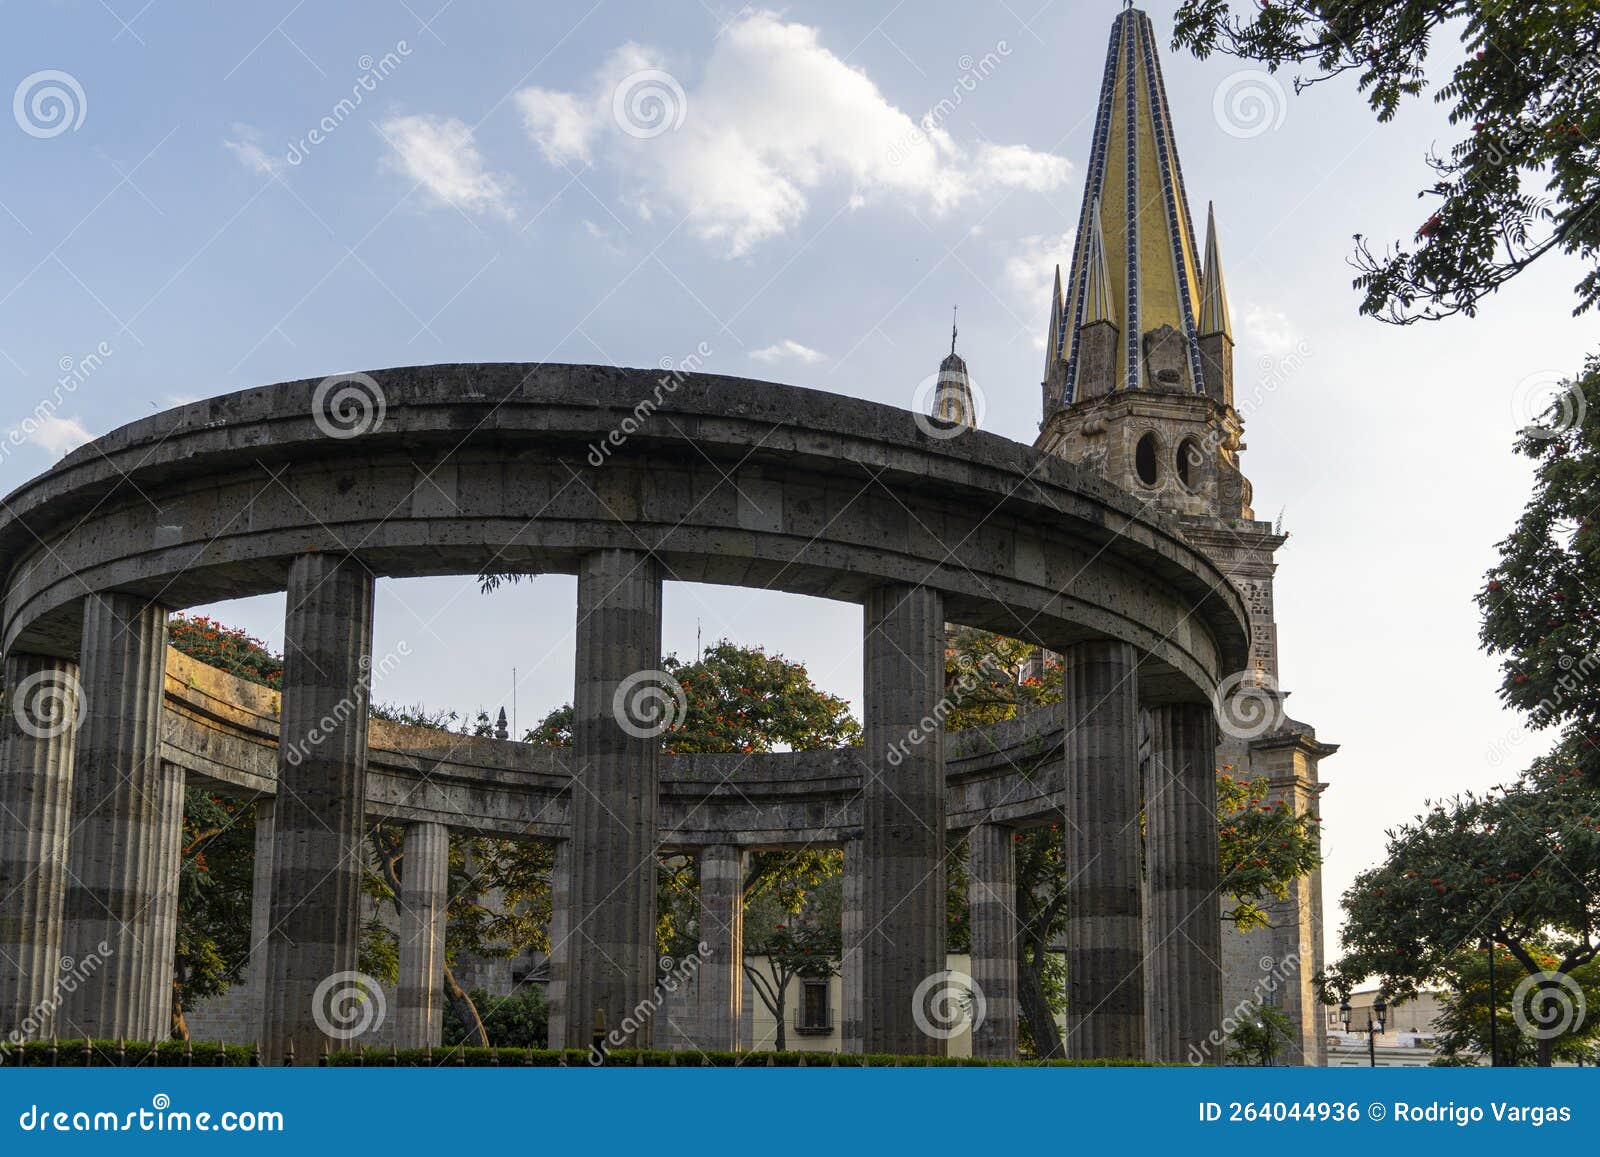 the rotunda rotonda de los jaliscienses ilustres in hidalgo street. it honors the memory